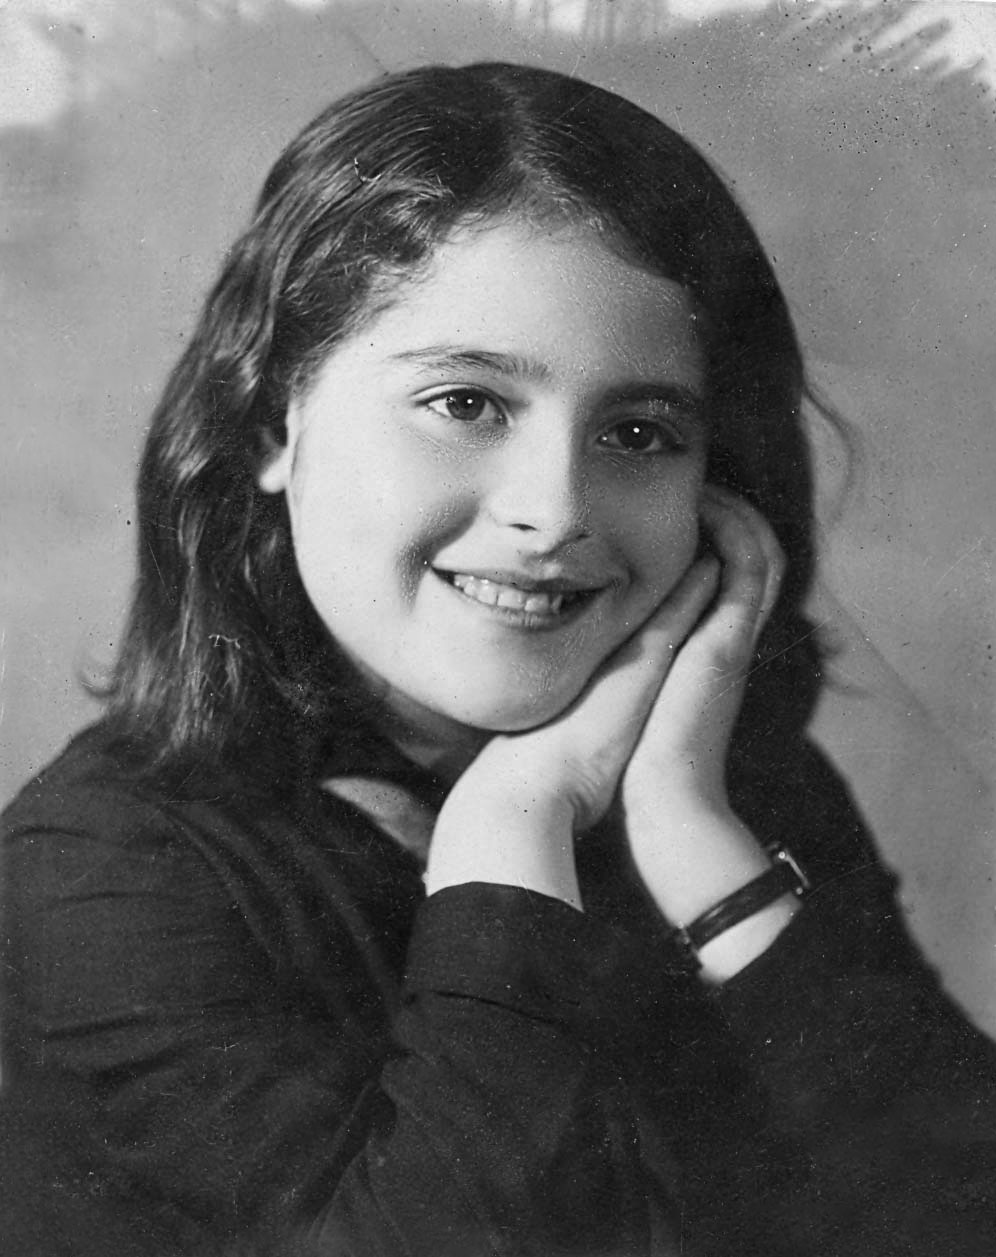 Anyuta Lifshitz was born in Kiev, Ukraine, in 1928. She was murdered in September 1941 at Babi Yar.